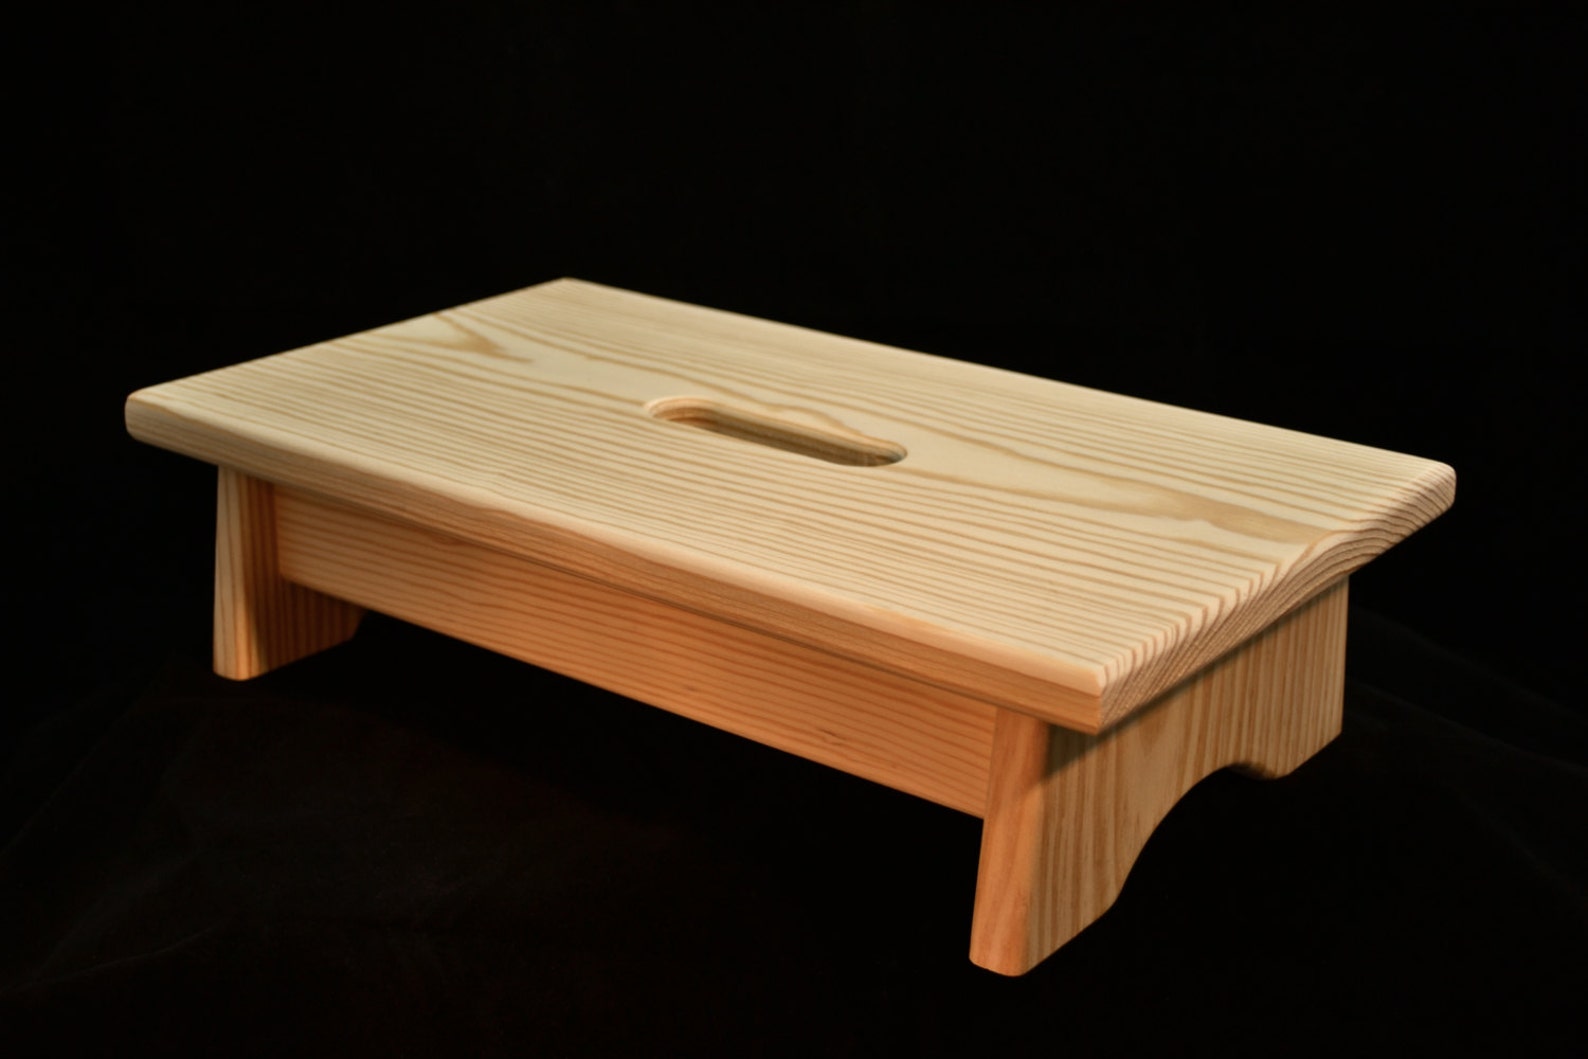 Подставка для ног для ванны. ФП-21 деревянная 9900348020 скамеечка для ног. Скамеечка деревянная. Подставка для ног деревянная. Скамеечка для ног деревянная.